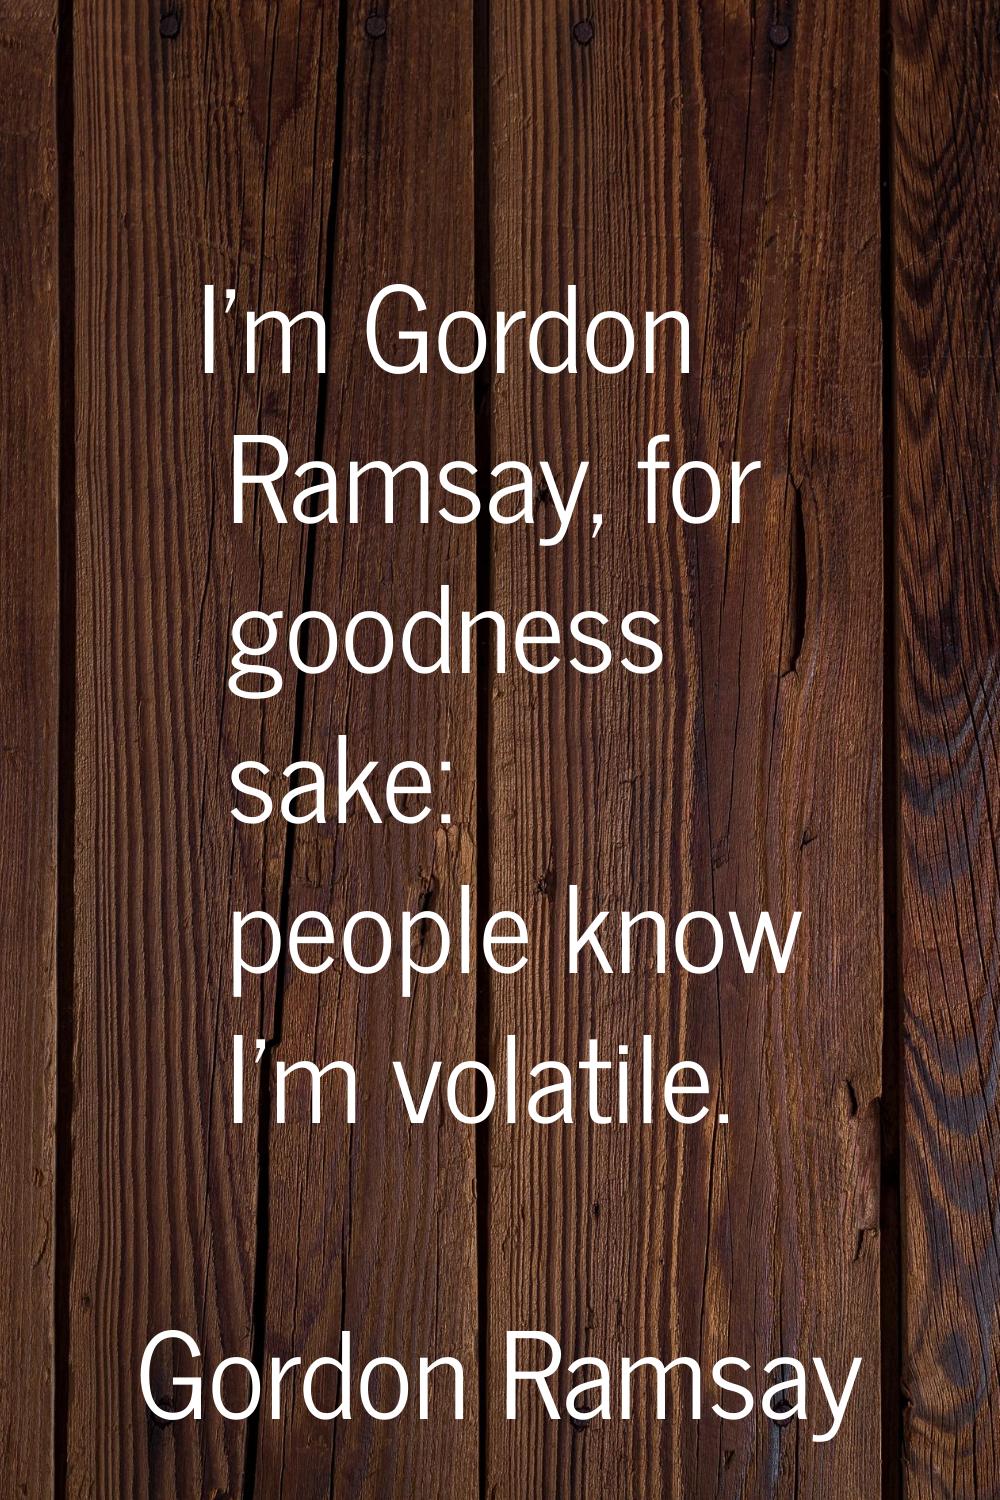 I'm Gordon Ramsay, for goodness sake: people know I'm volatile.